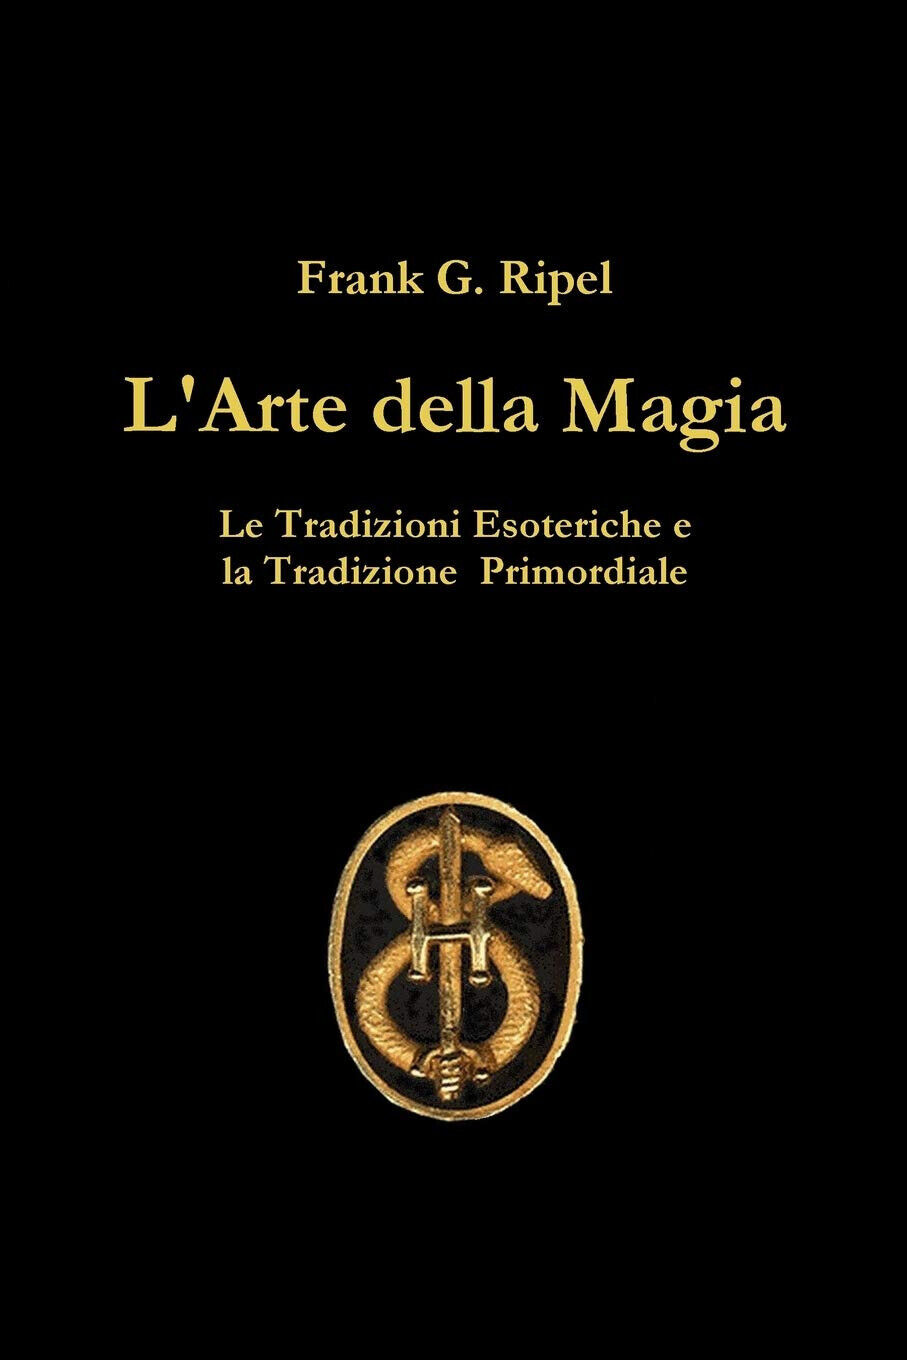 L'Arte della Magia - Frank G. Ripel - Lulu.com, 2019